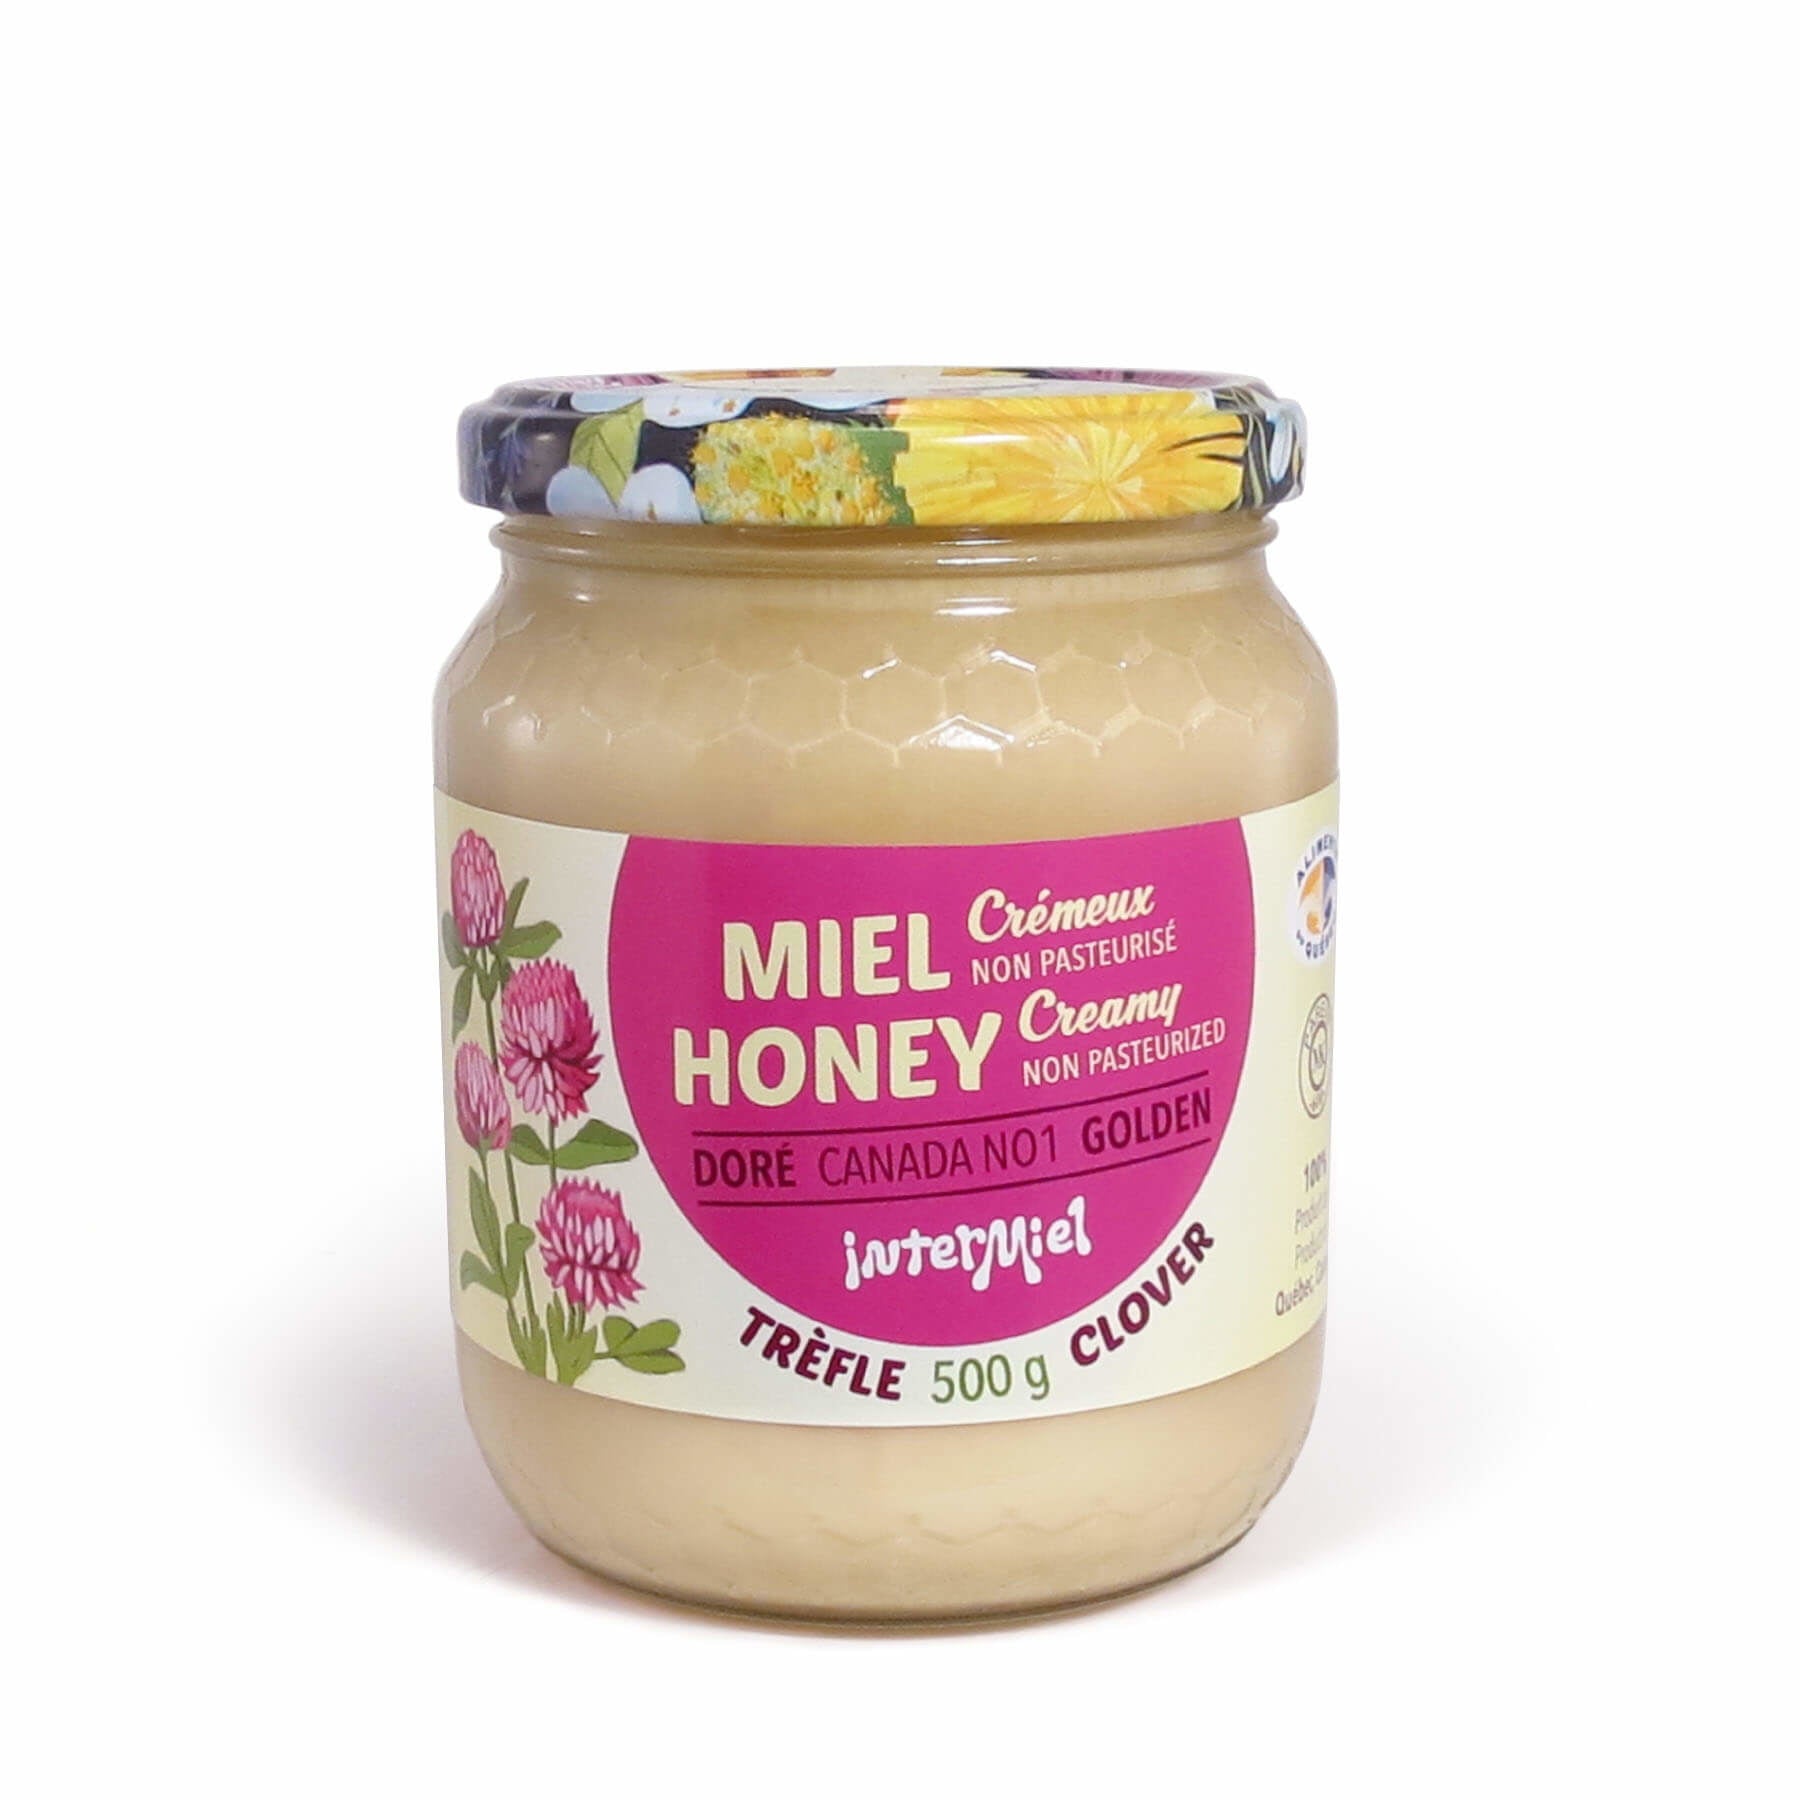 Jar of unpasteurized clover honey